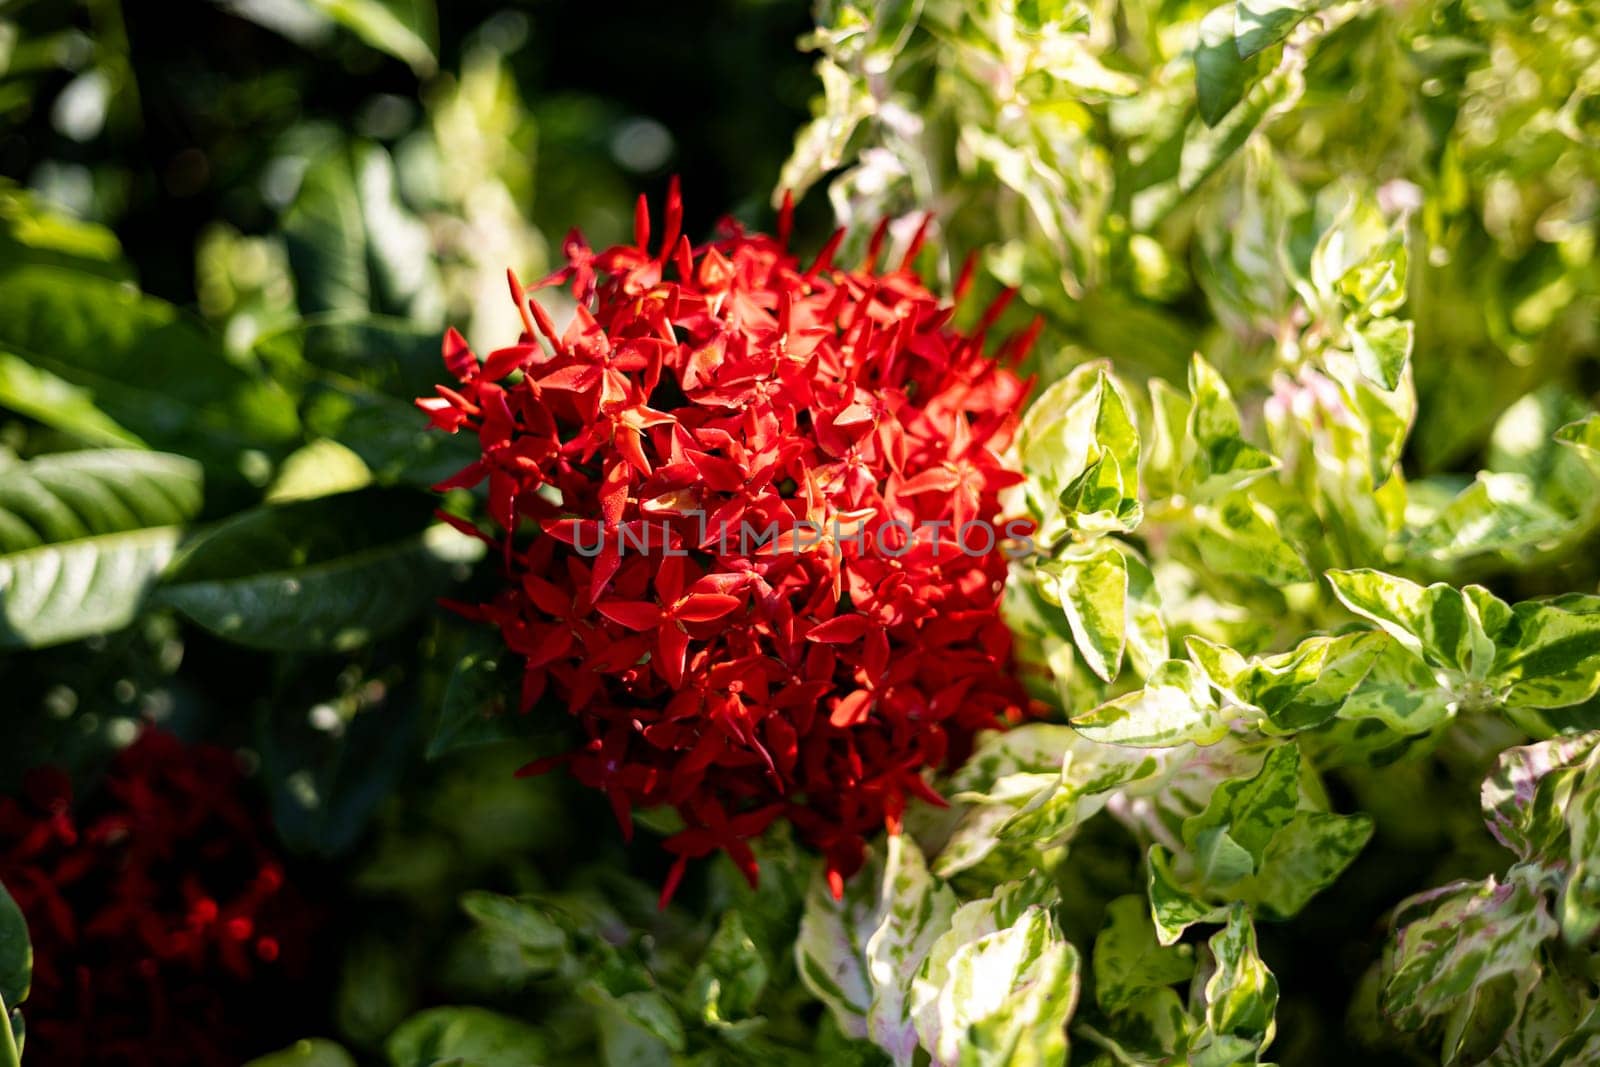 Beautiful Red spike flower. King Ixora blooming (Ixora chinensis). Rubiaceae flower.Ixora flower. Ixora coccinea flower in the garden.